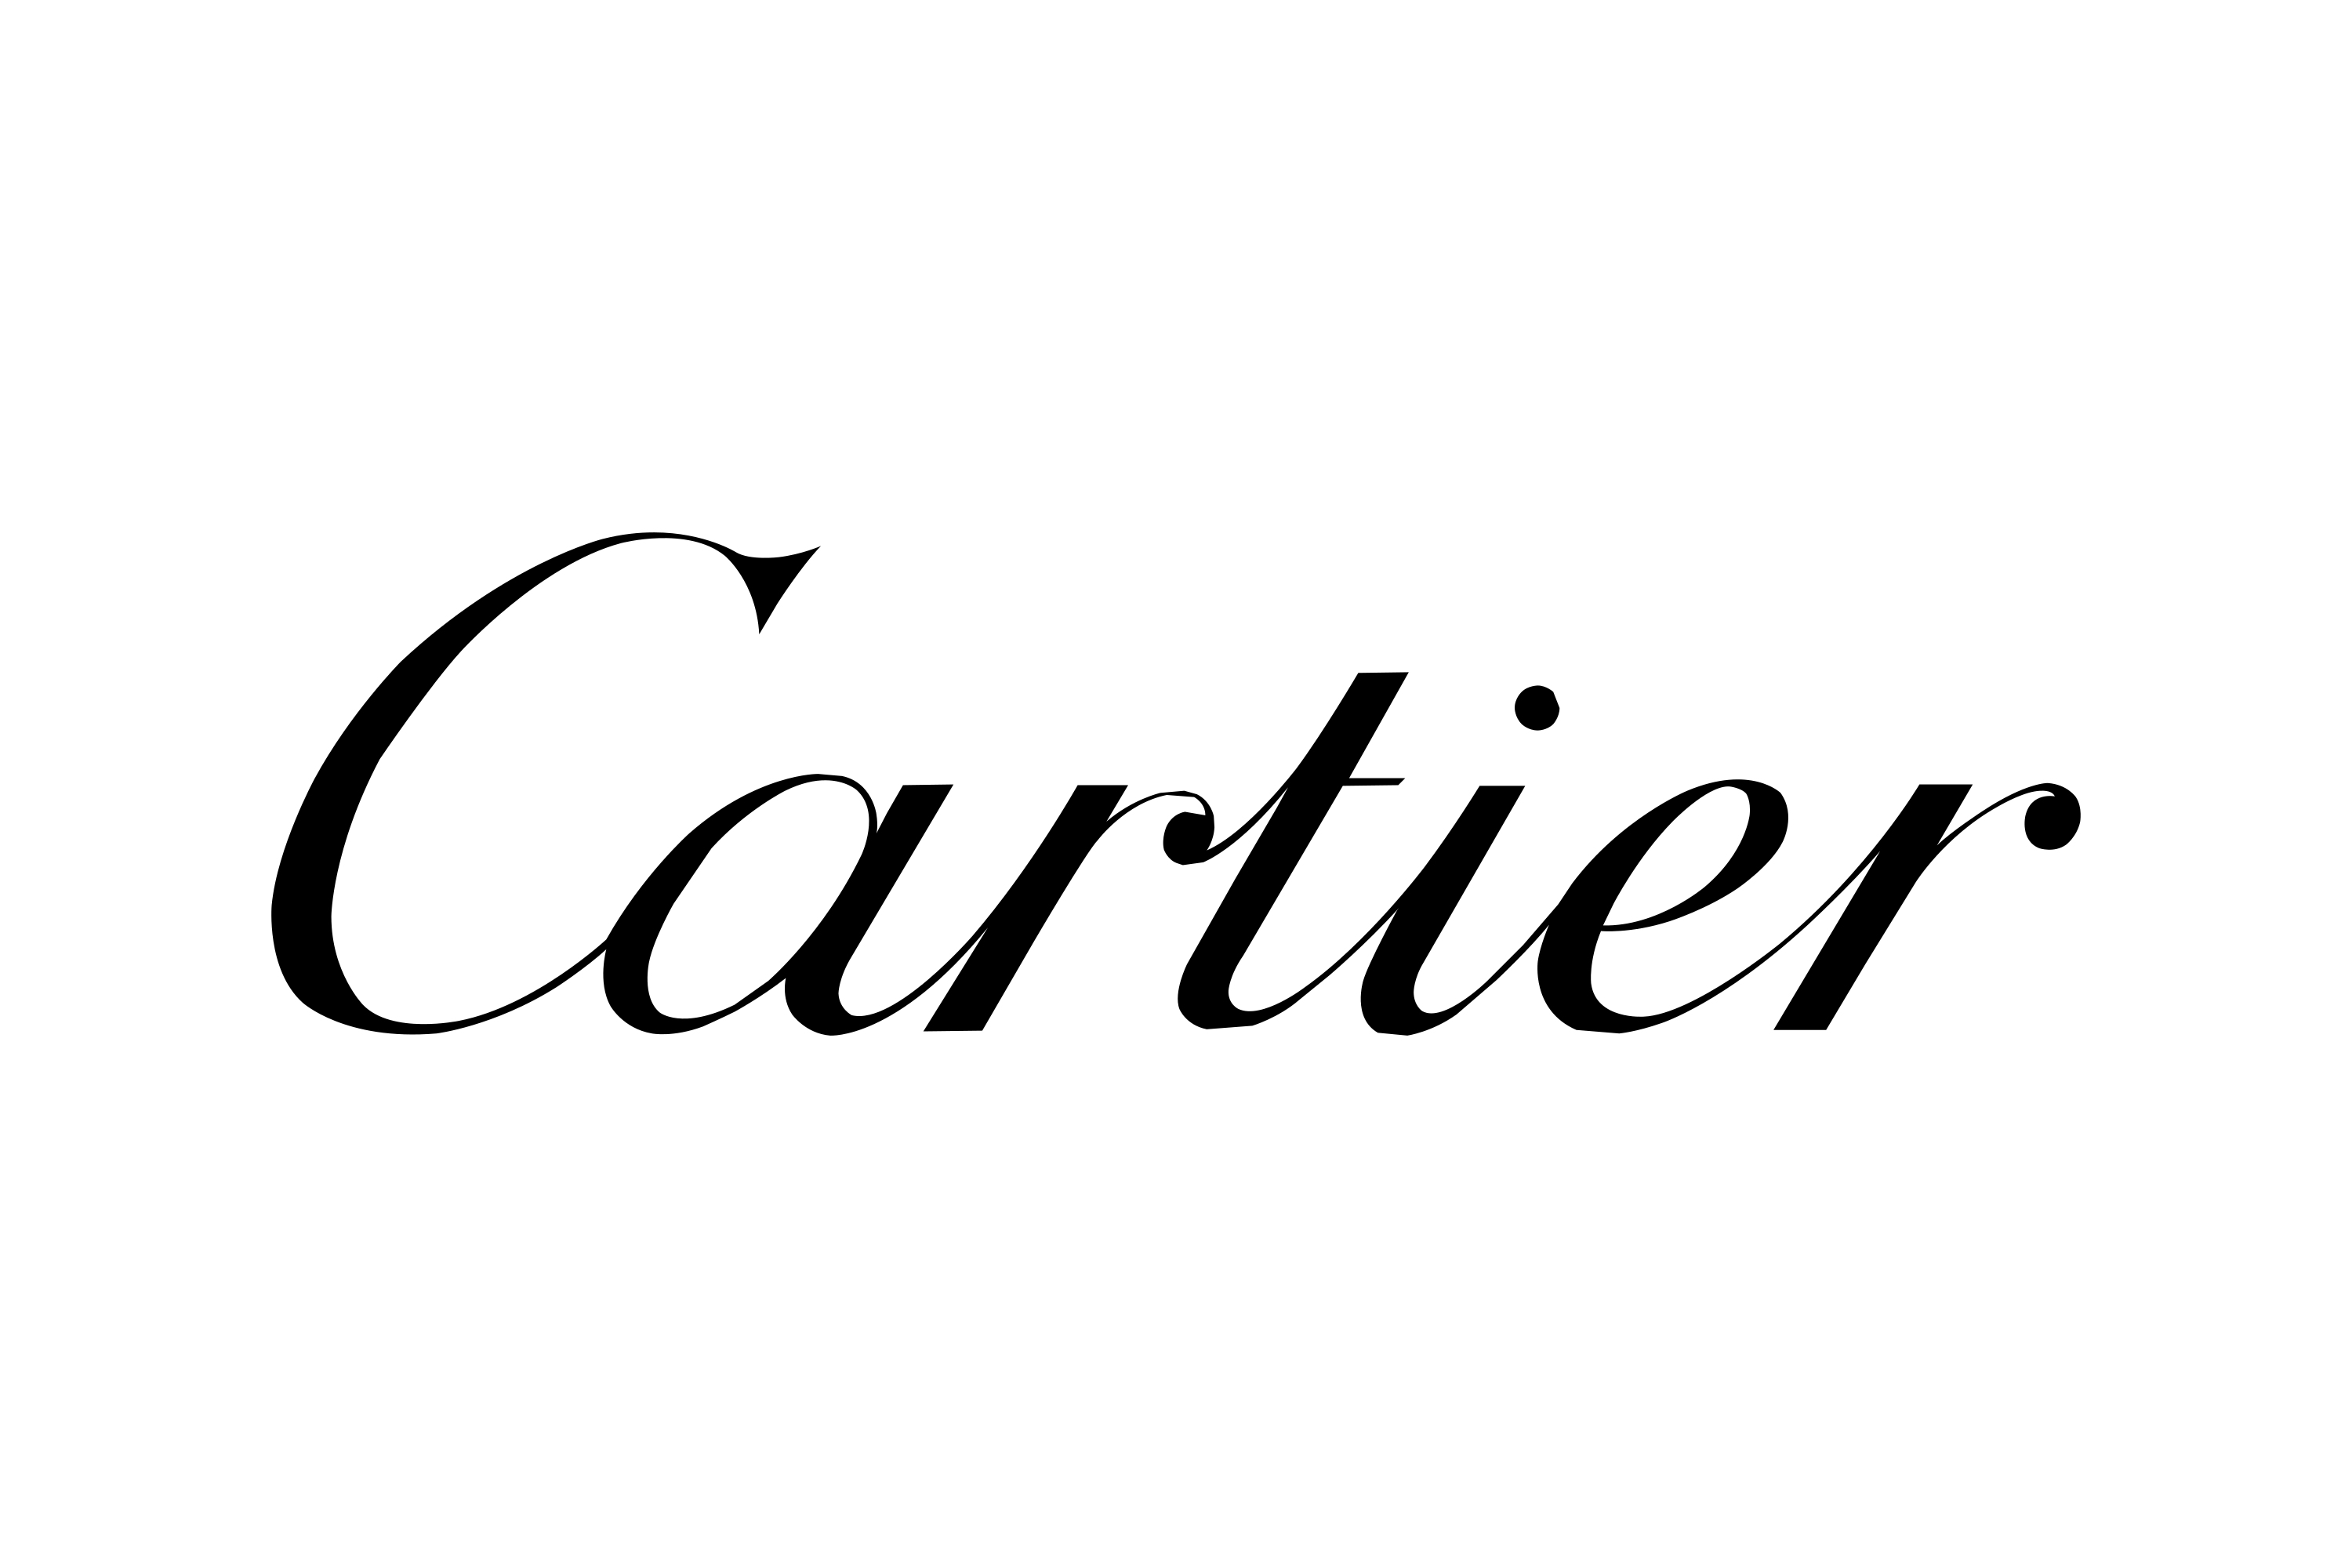 Download Cartier Logo in SVG Vector or PNG File Format - Logo.wine